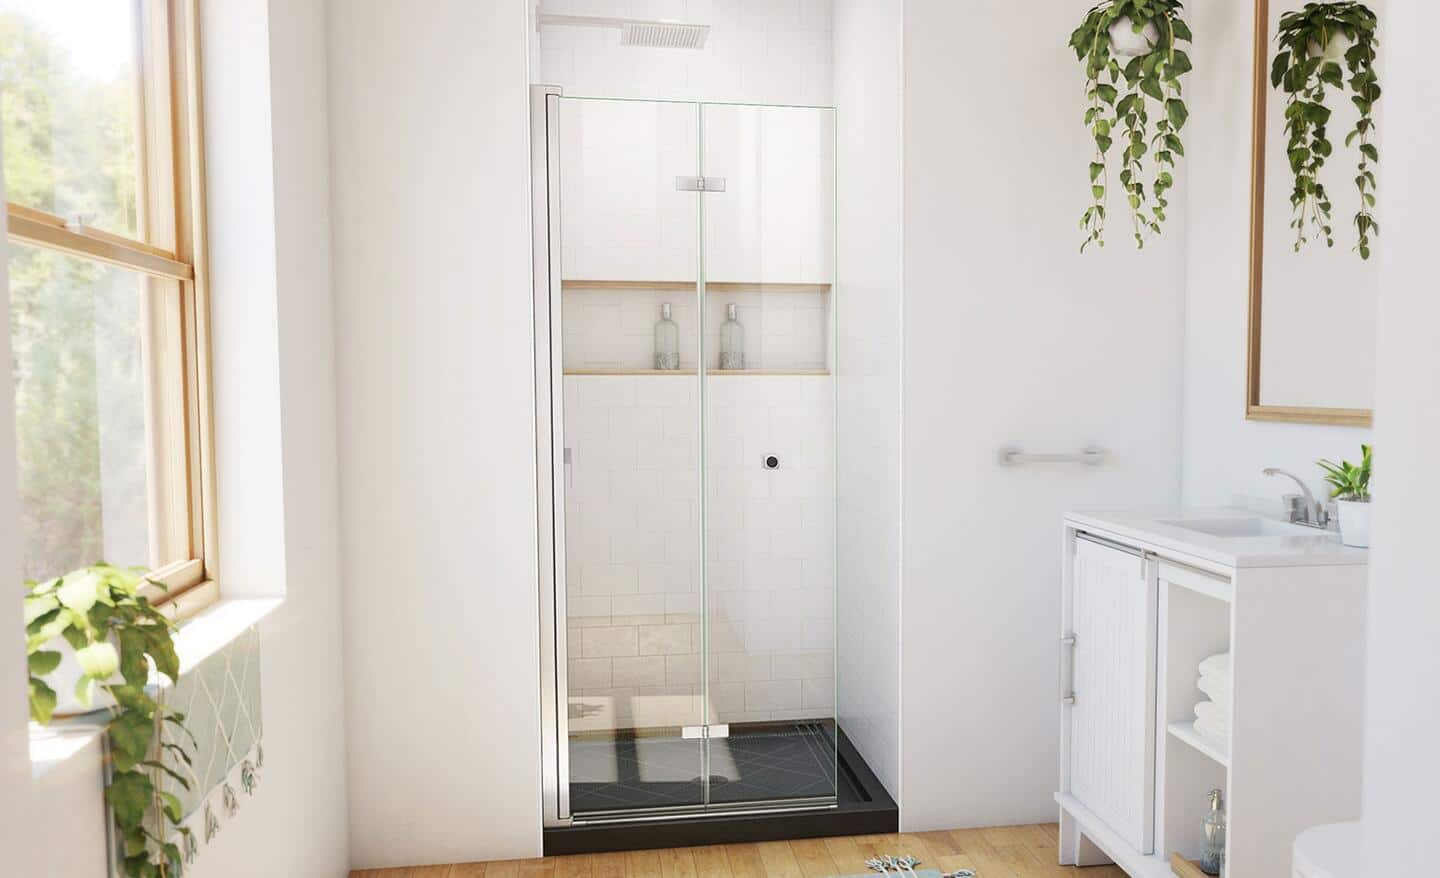 A shower in a small bath featuring bi-fold doors.